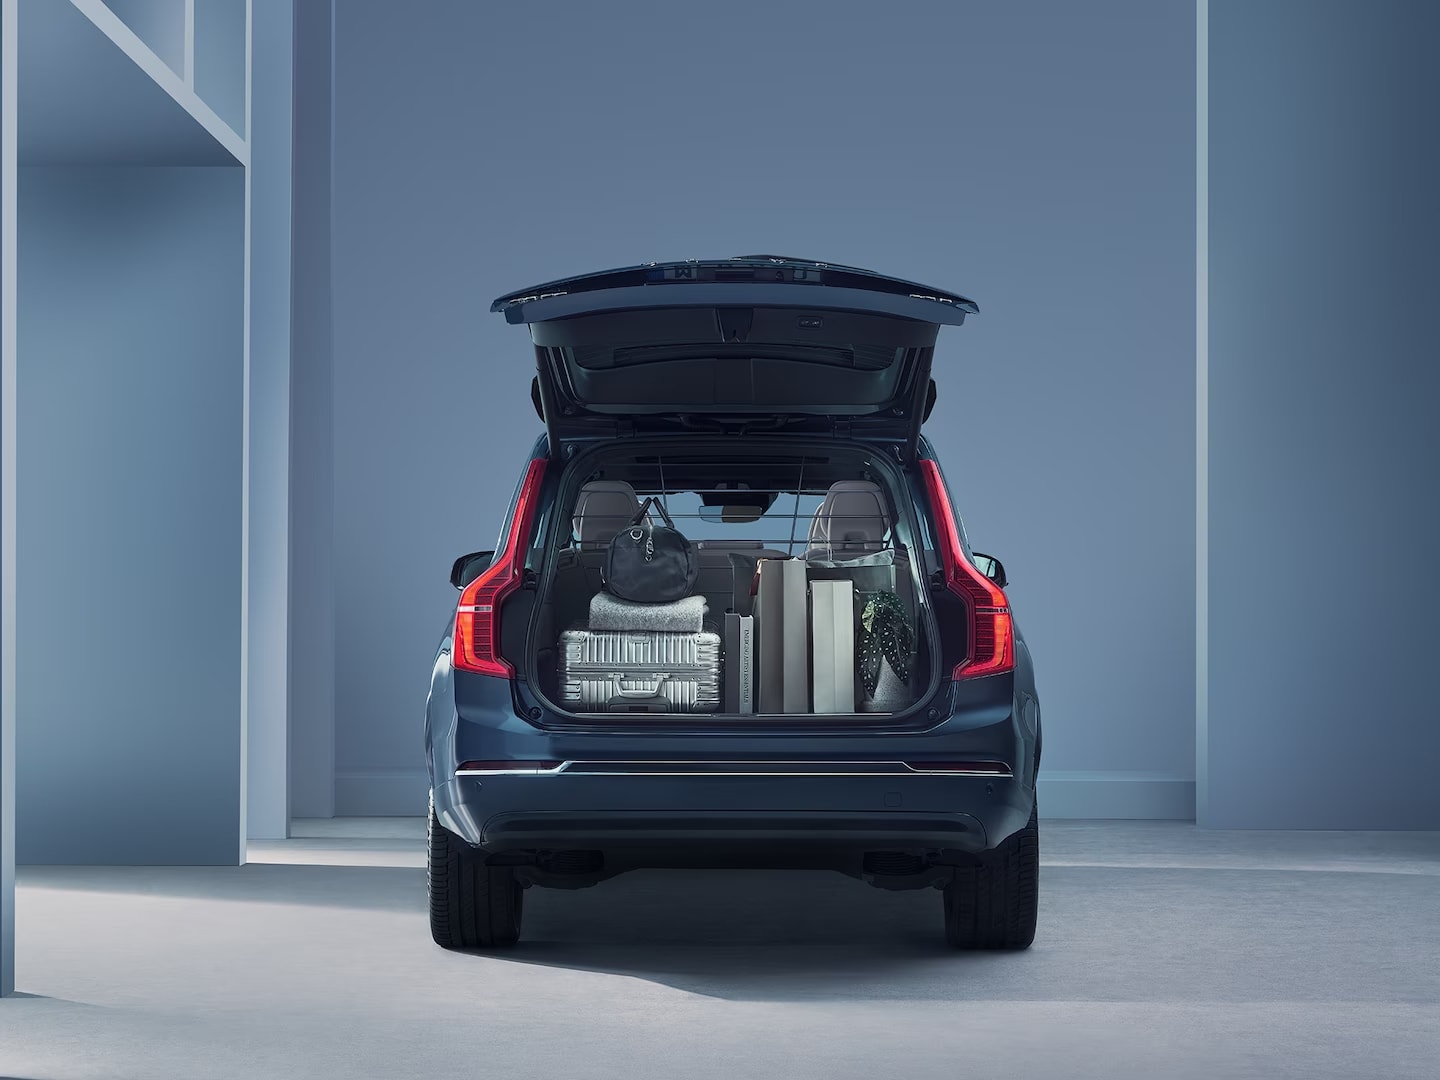 The boot of the Volvo XC90 mild hybrid SUV optimizes storage capacity.